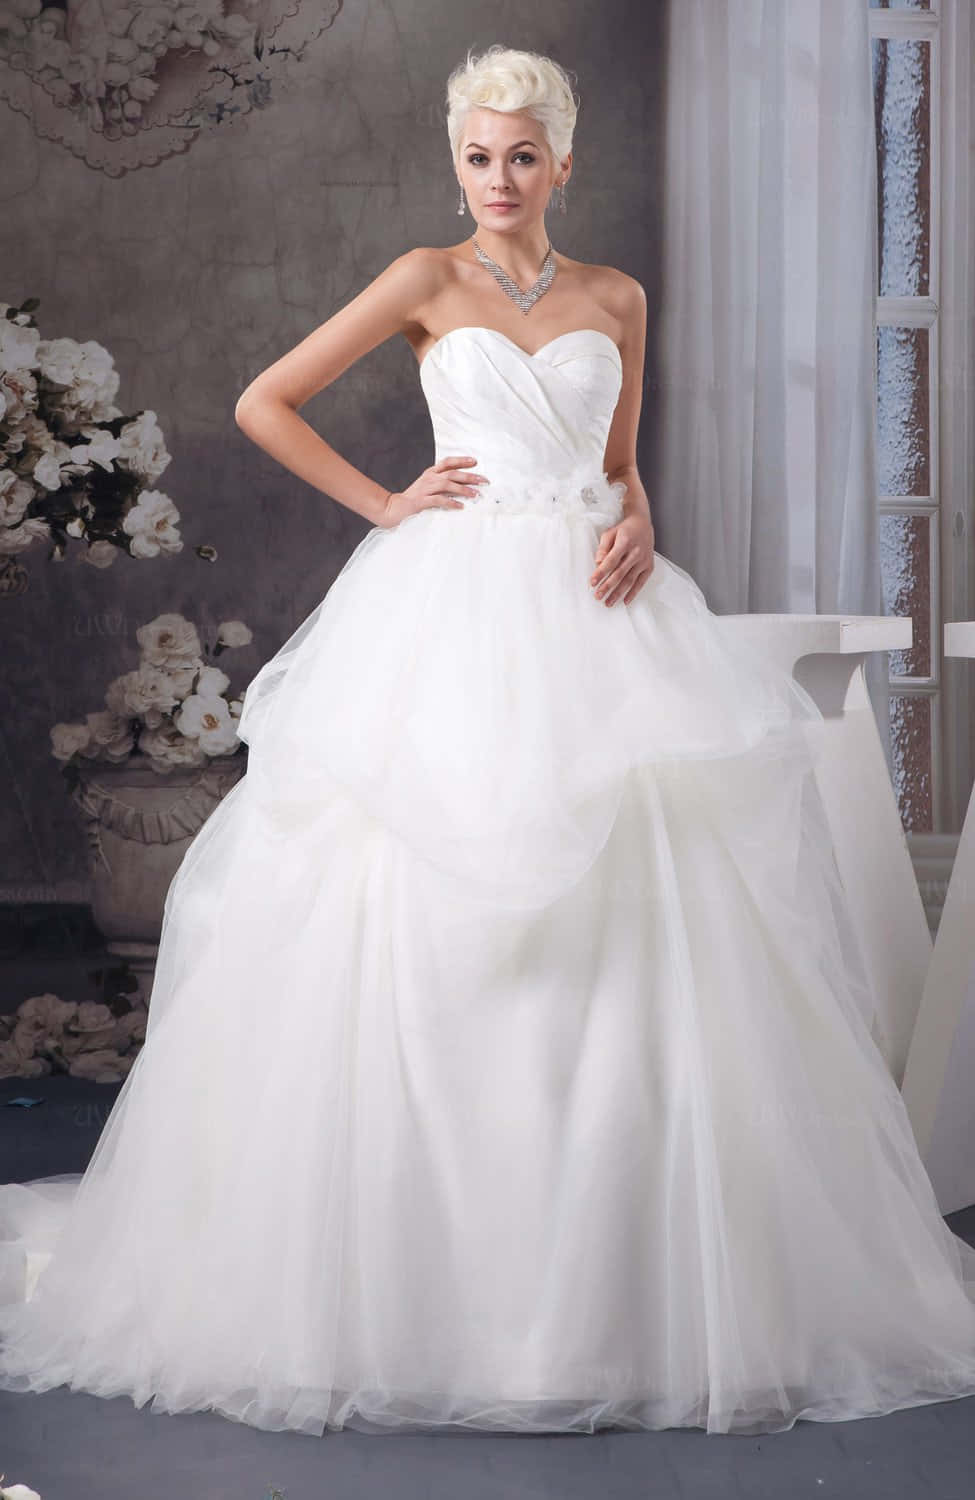 A Beautiful Woman In A White Wedding Dress